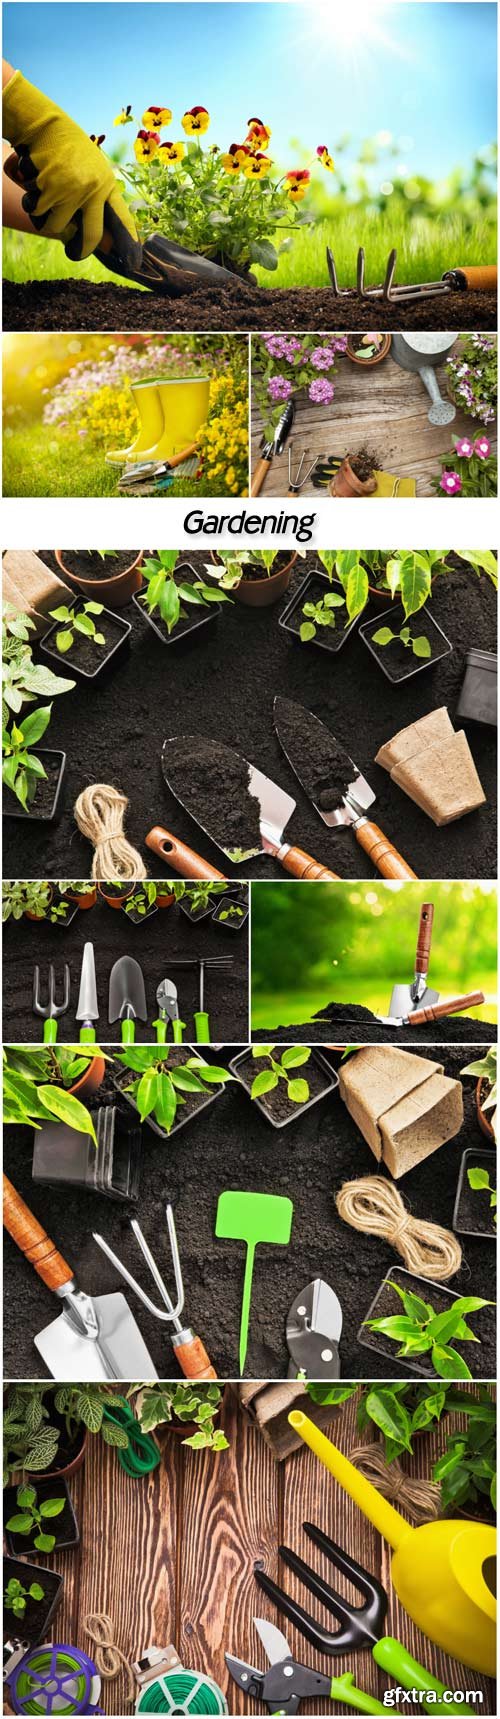 Gardening, flowers and gardening tools